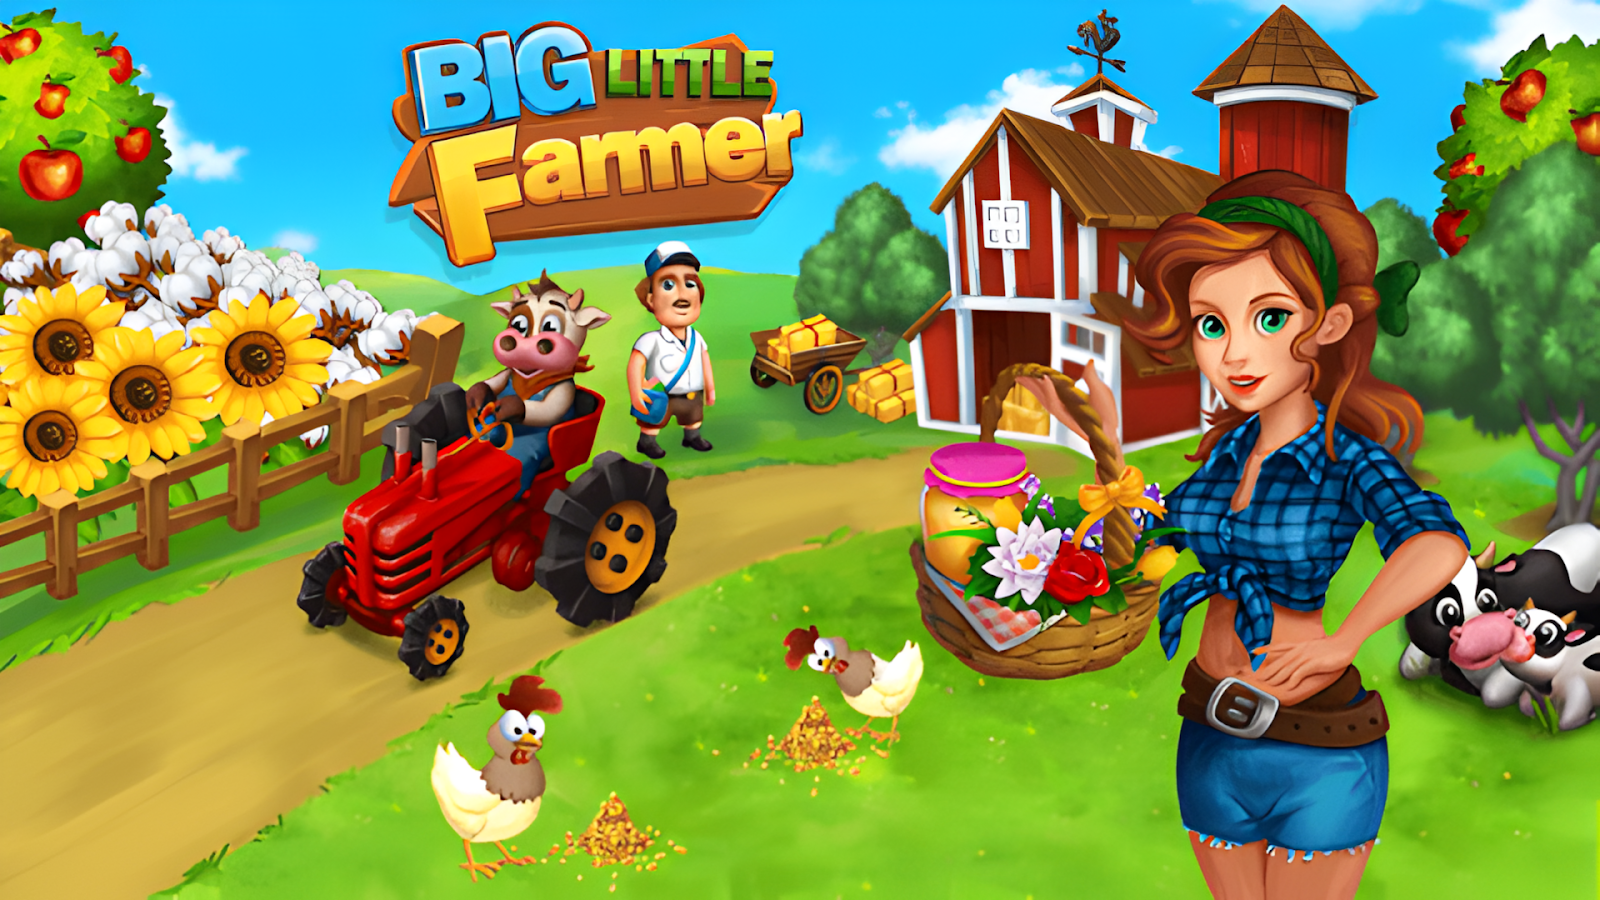 Игра big Farm. Холидей игра ферма. Большая ферма big Farm. Big Farm story / большая ферма игра.